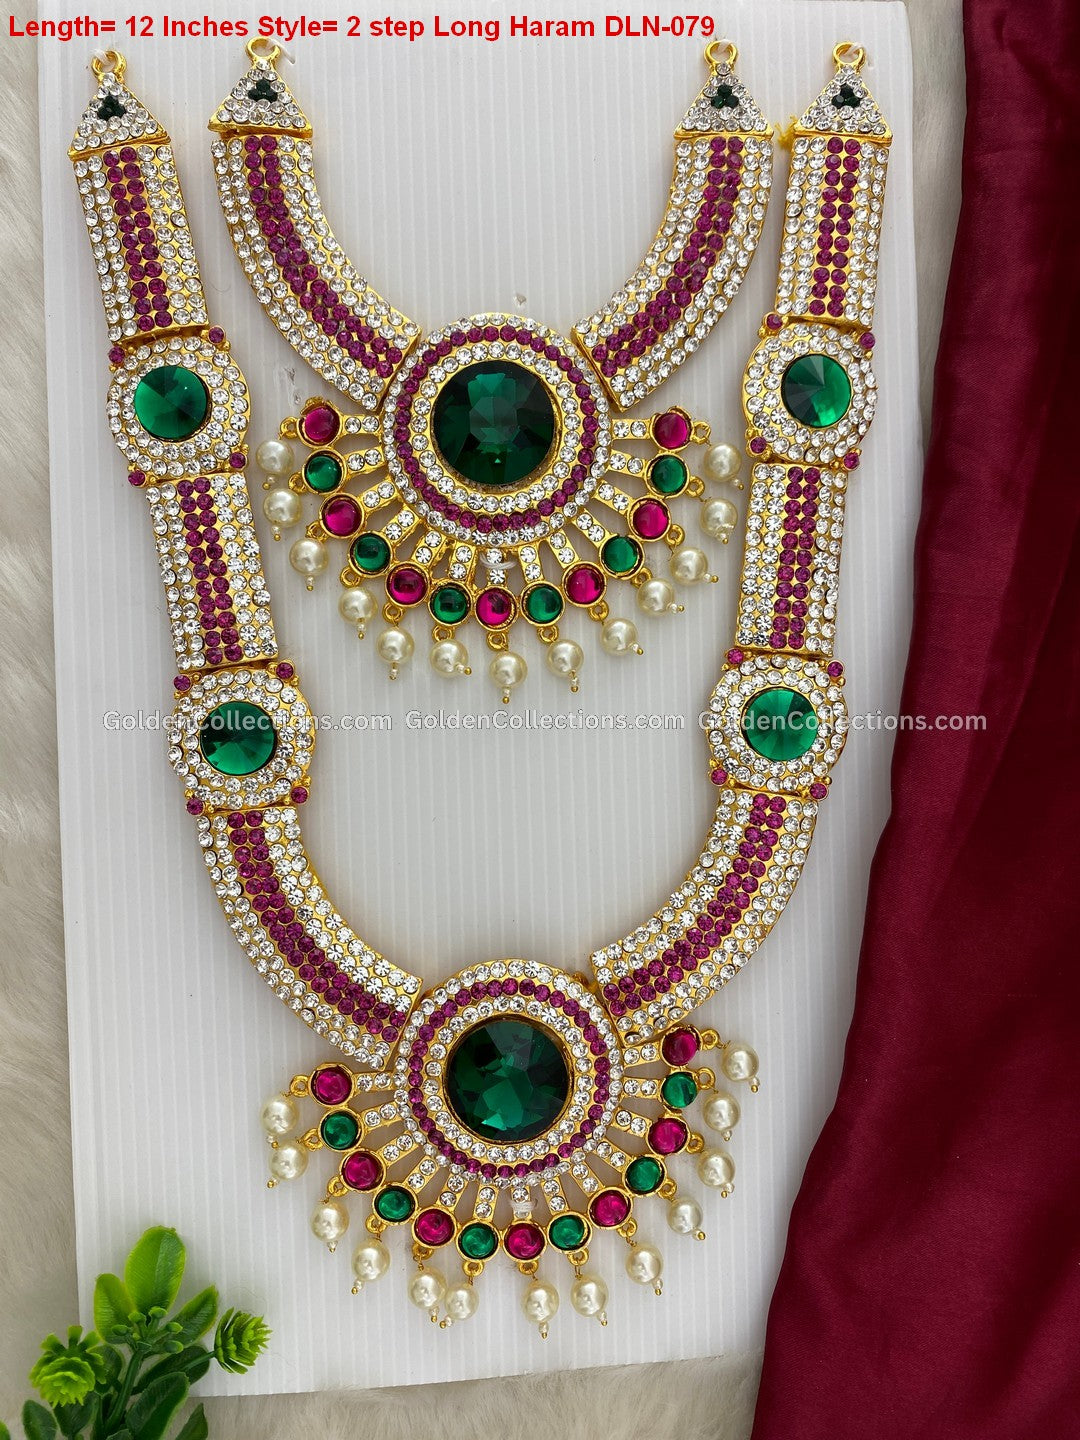 Deity Long Necklace - God Jewellery Set for Sale DLN-079